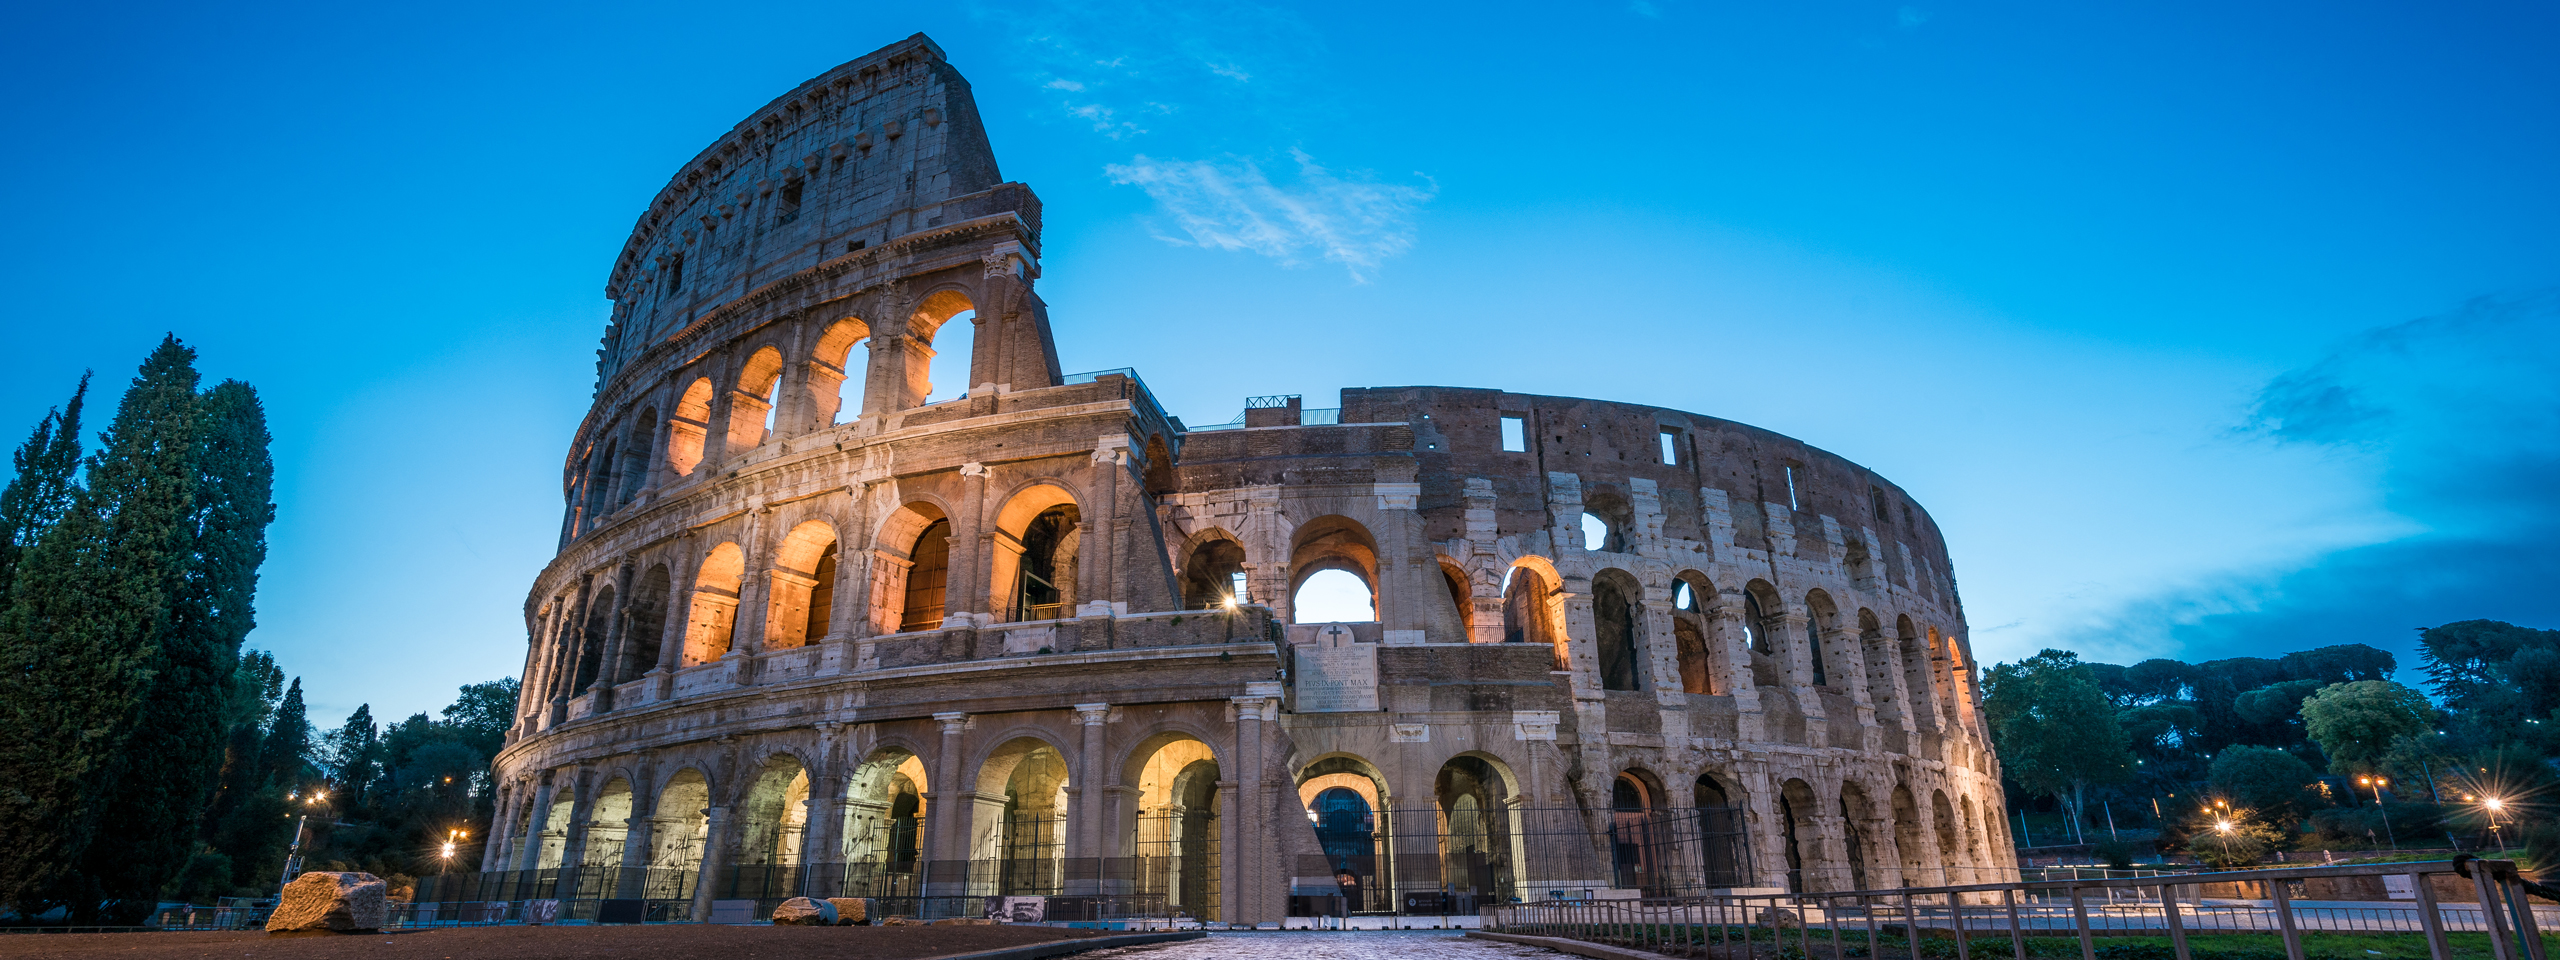 The Colosseum, Rome 